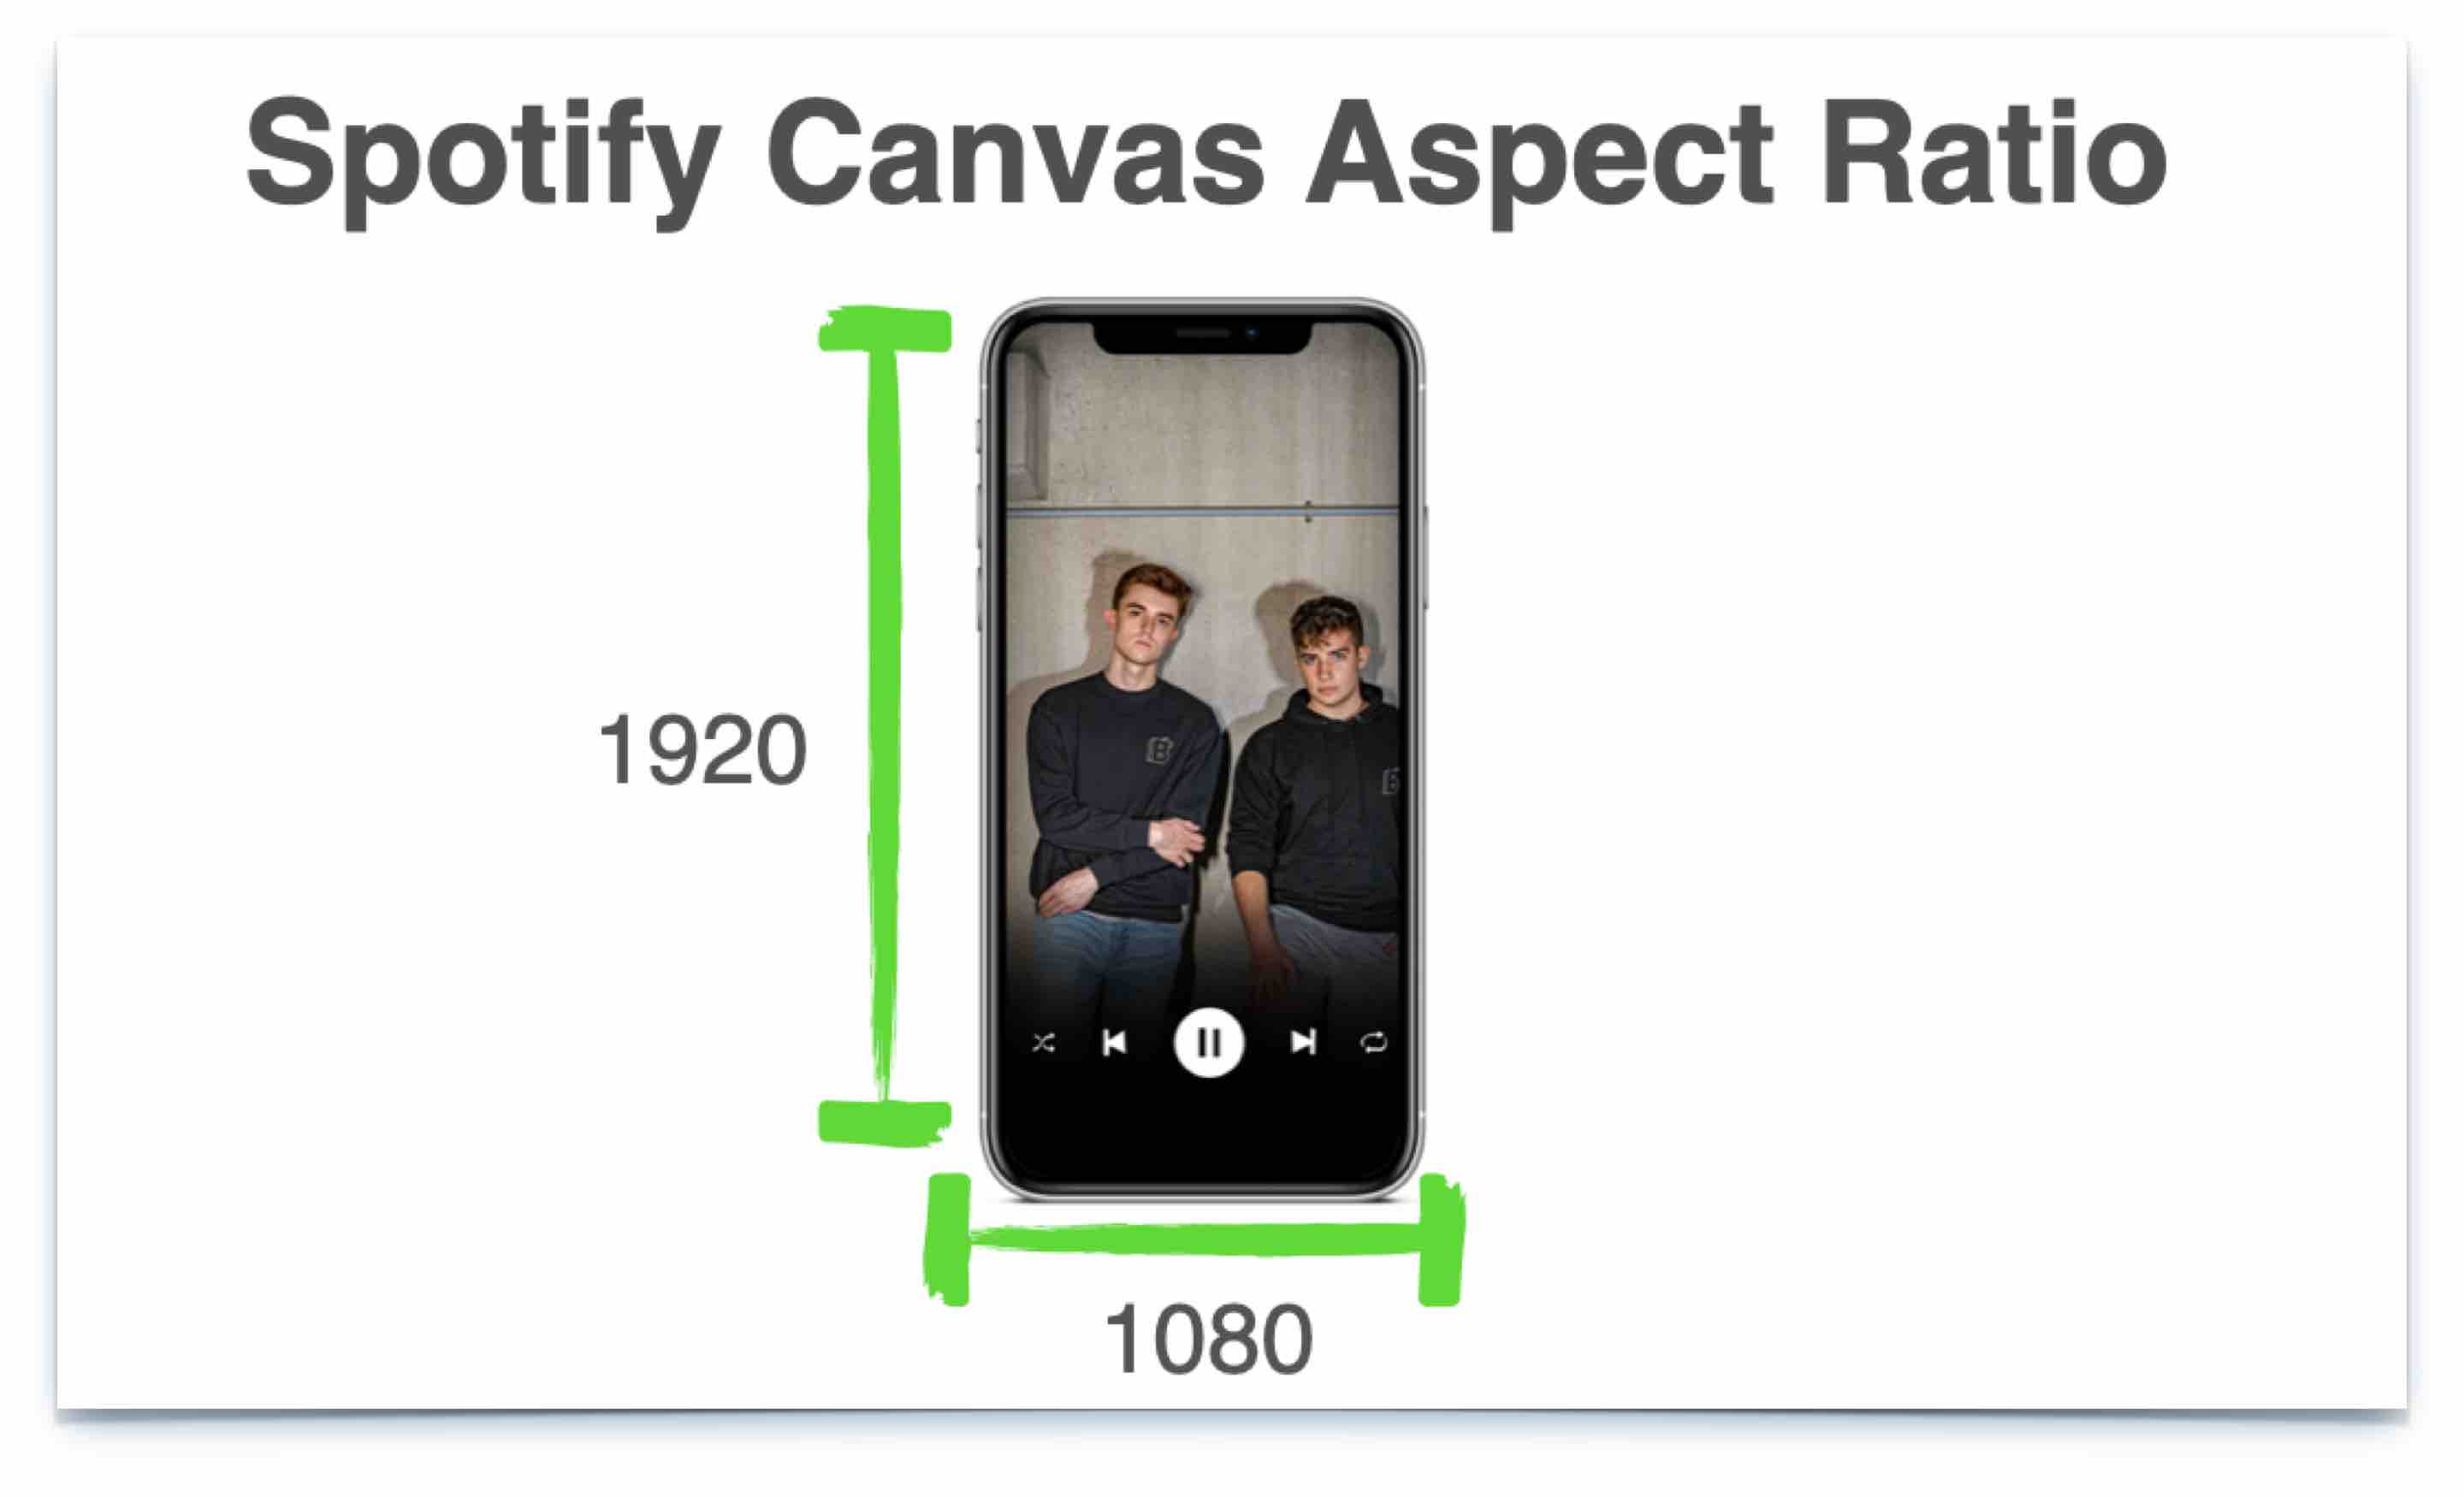 Spotify Canvas Aspect Ratio 